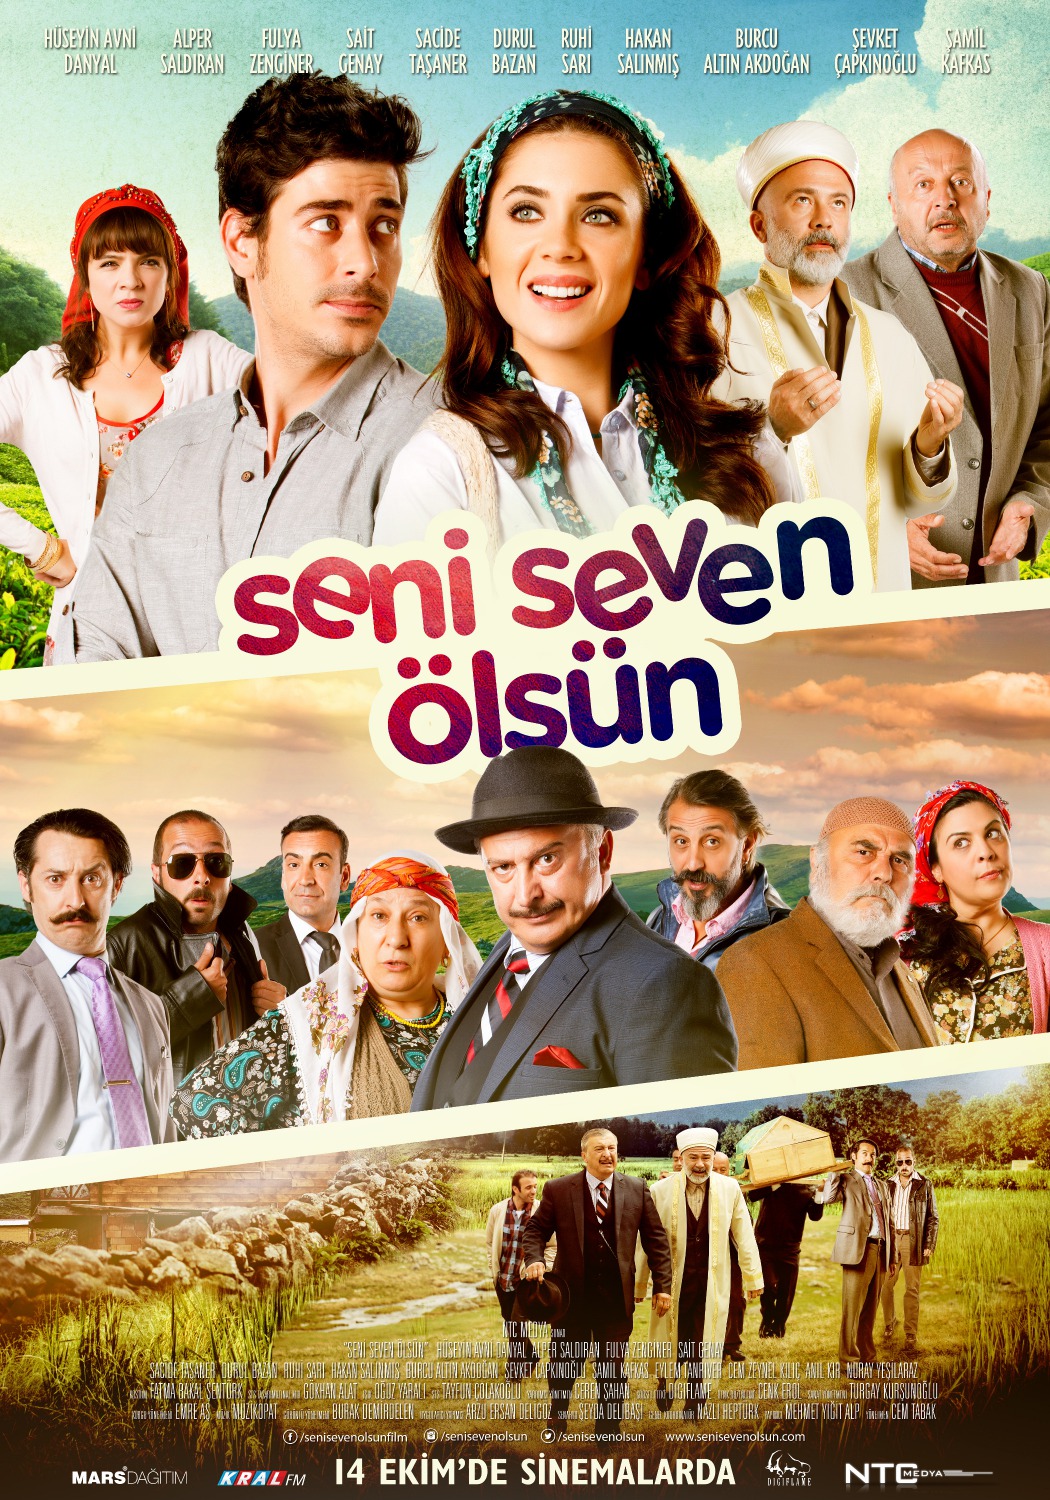 Extra Large Movie Poster Image for Seni Seven Ölsün 